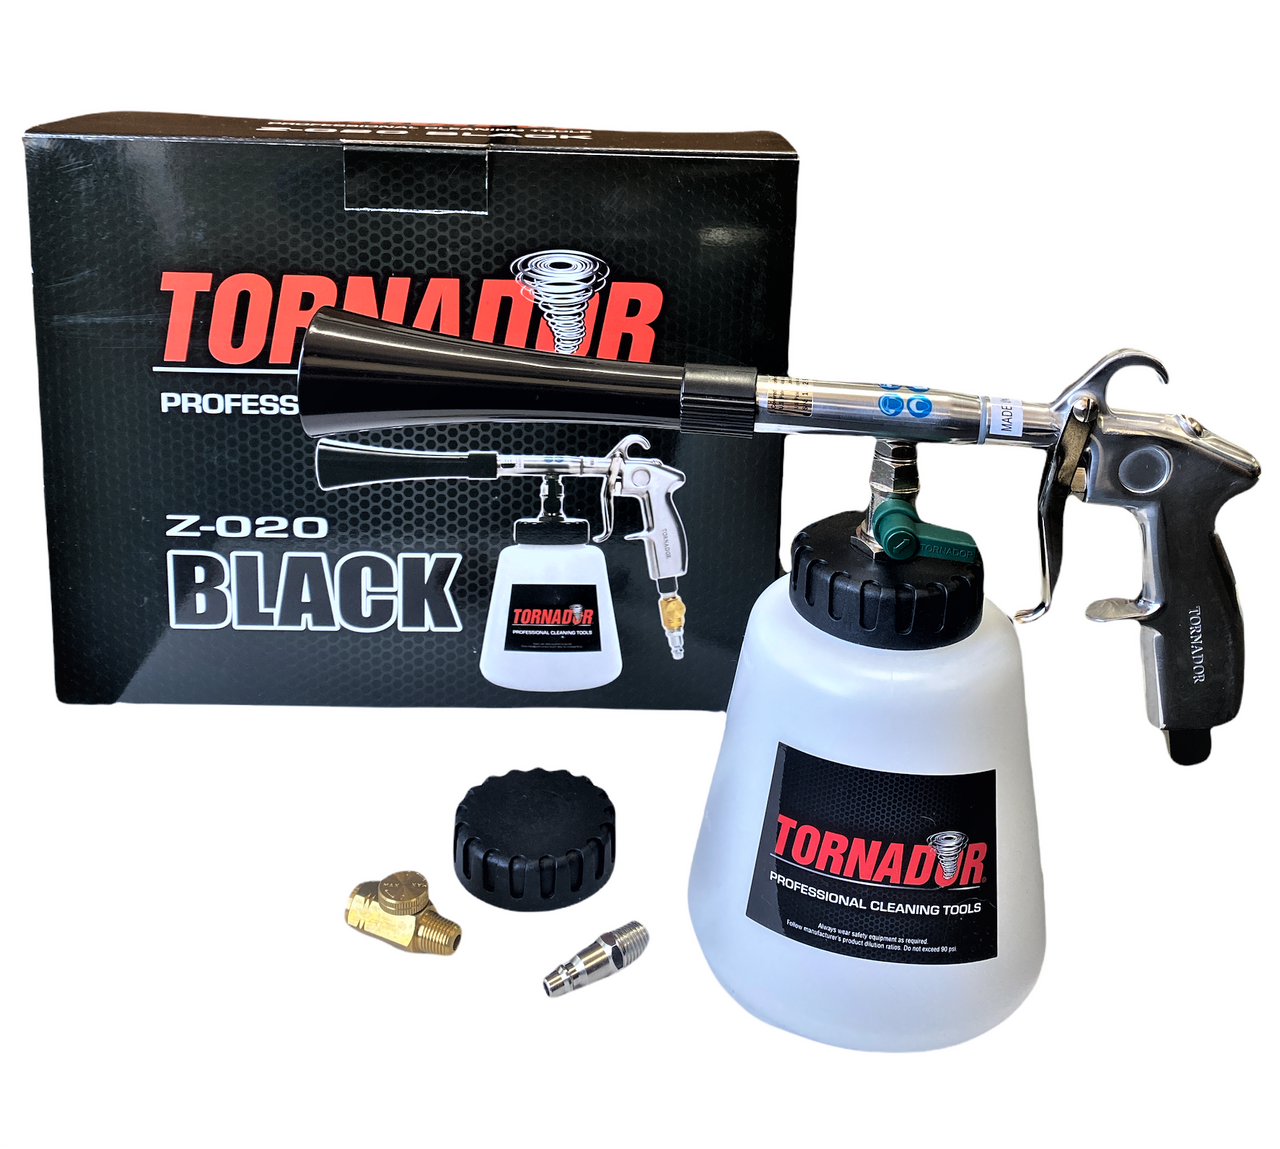 Tornador Black Car Tool Z-020